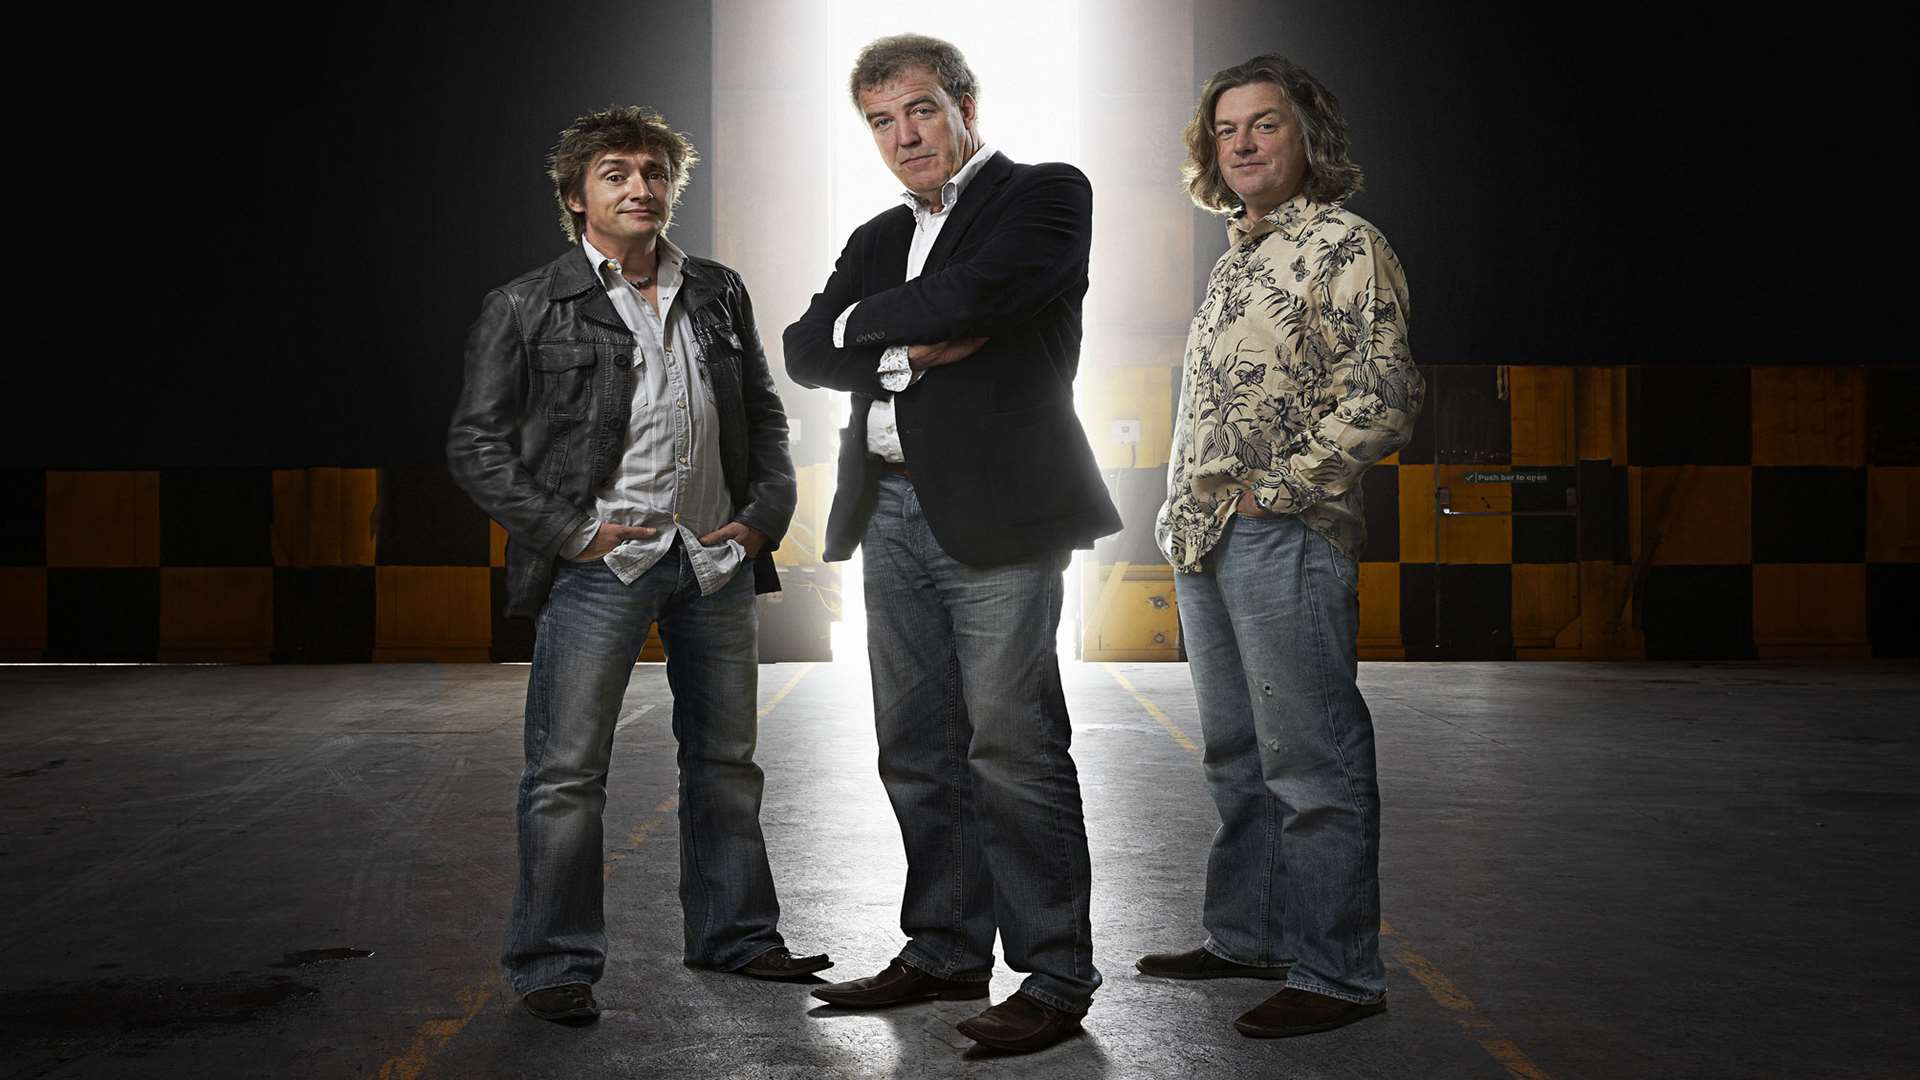 Presenters Richard Hammond, Jeremy Clarkson and James May